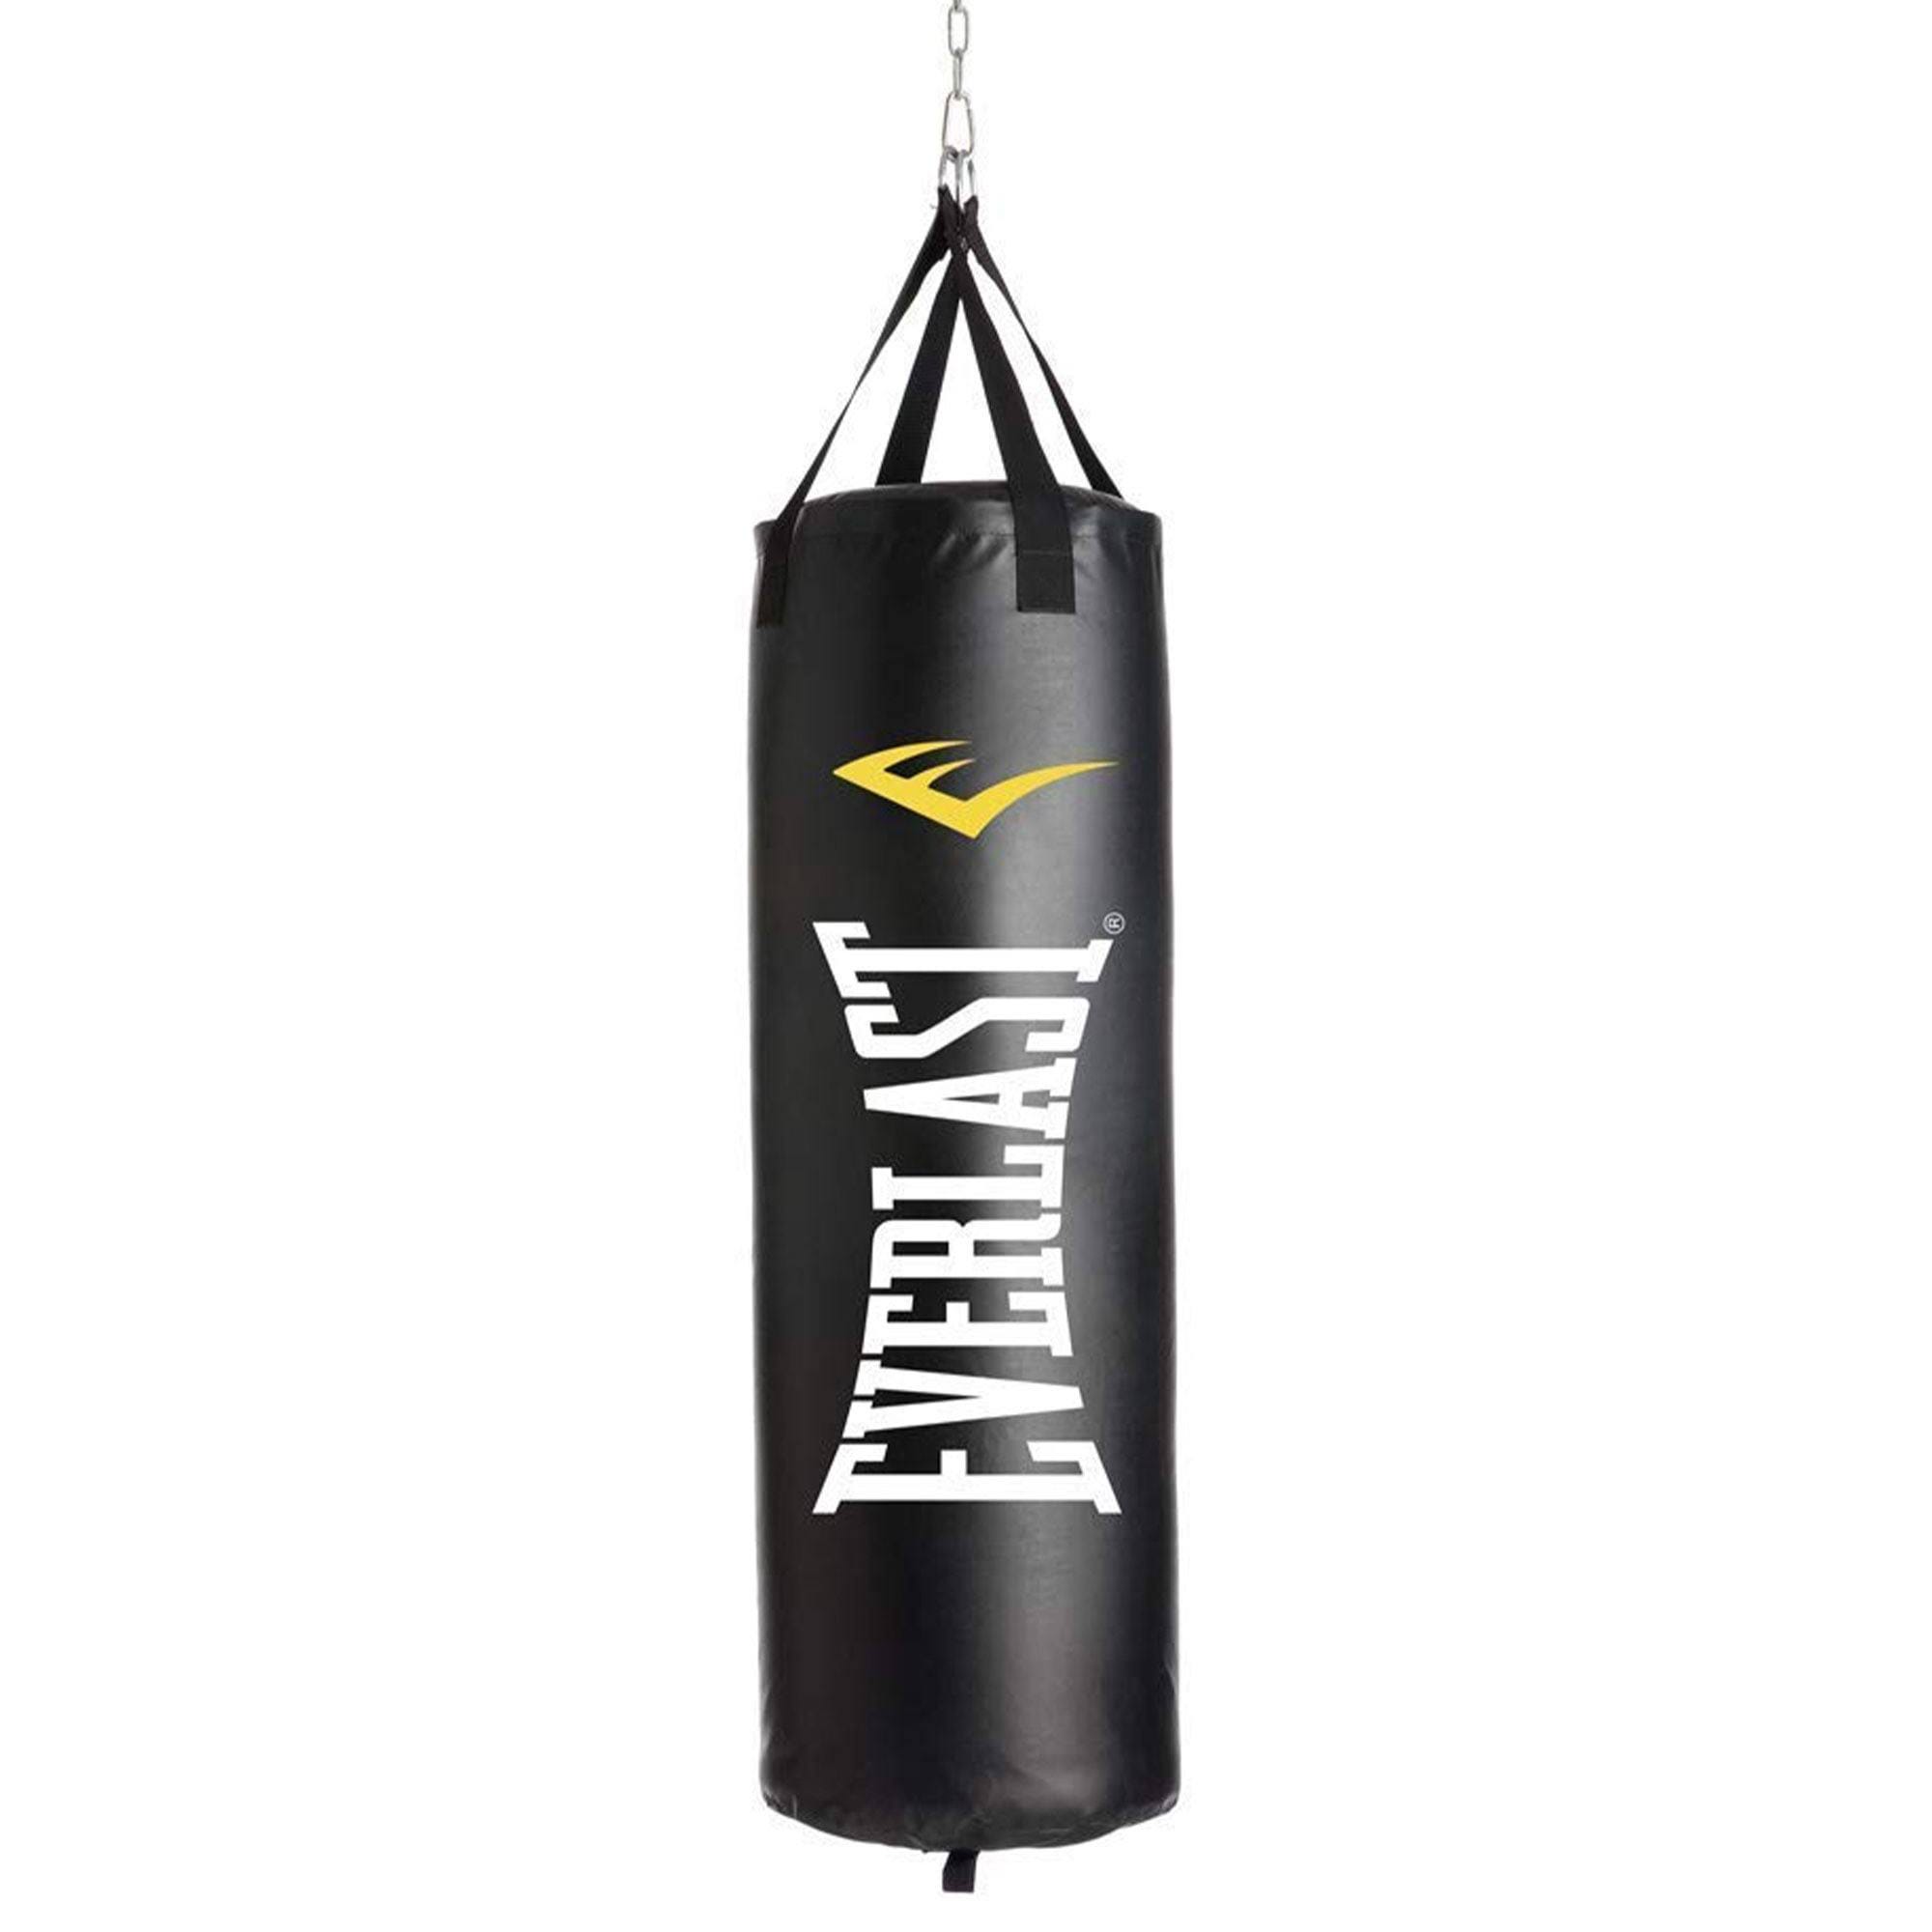 Everlast Heavy Nevatear Boxing Bag - 40 lbs. Black | Image